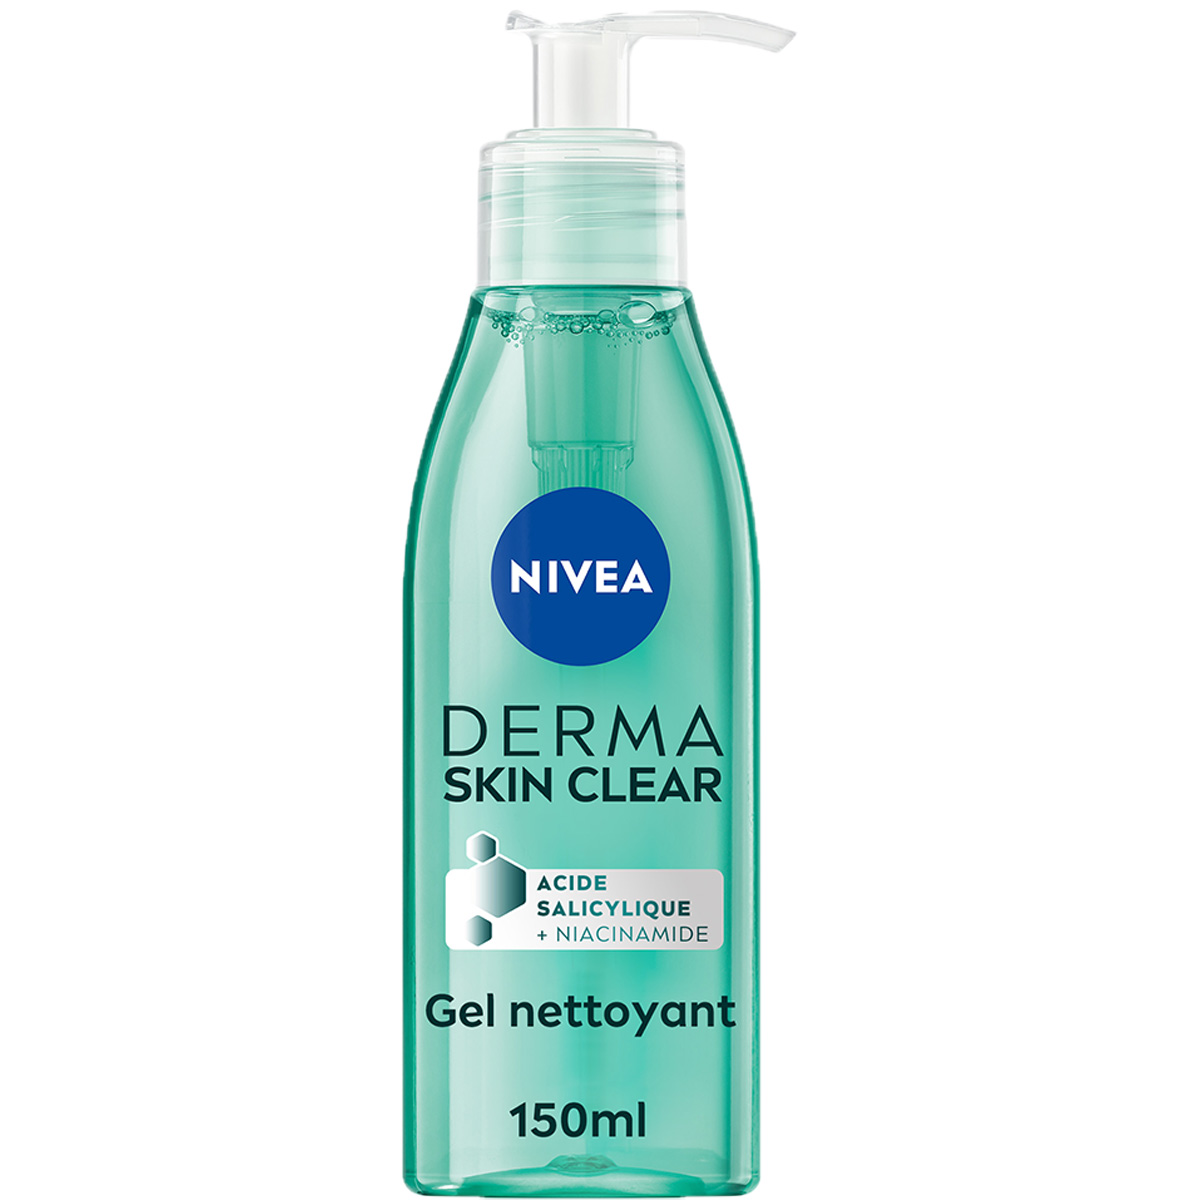 Gel nettoyant - Derma Skin Clear - Peaux à imperfections - 150 ml